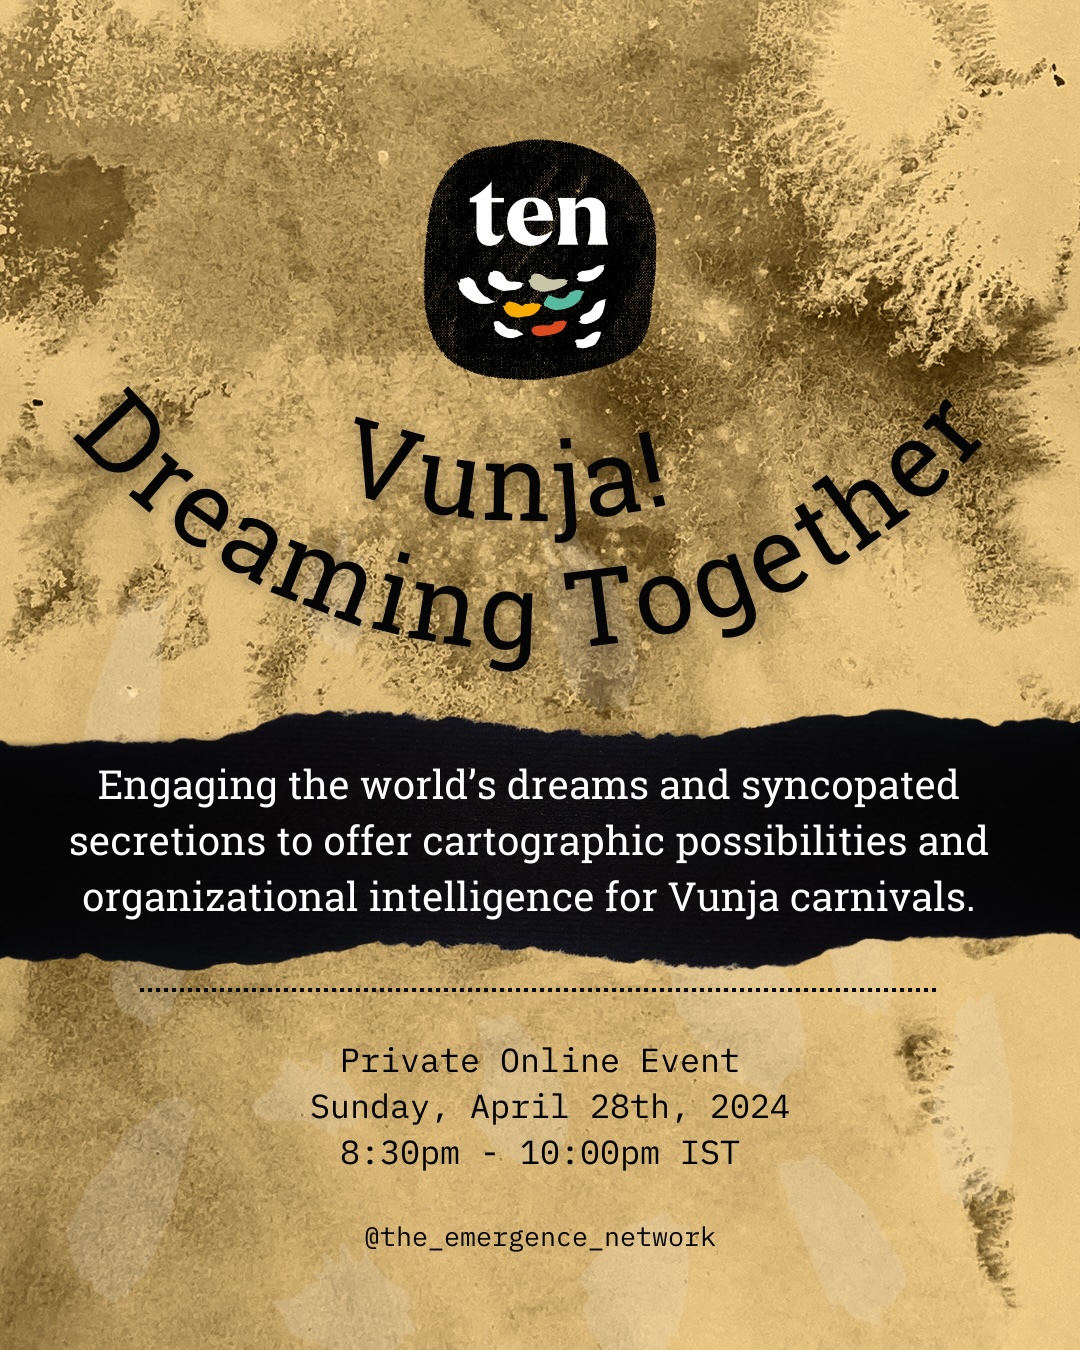 Vunja! Dreaming Together Communal Sensing Series - Session III